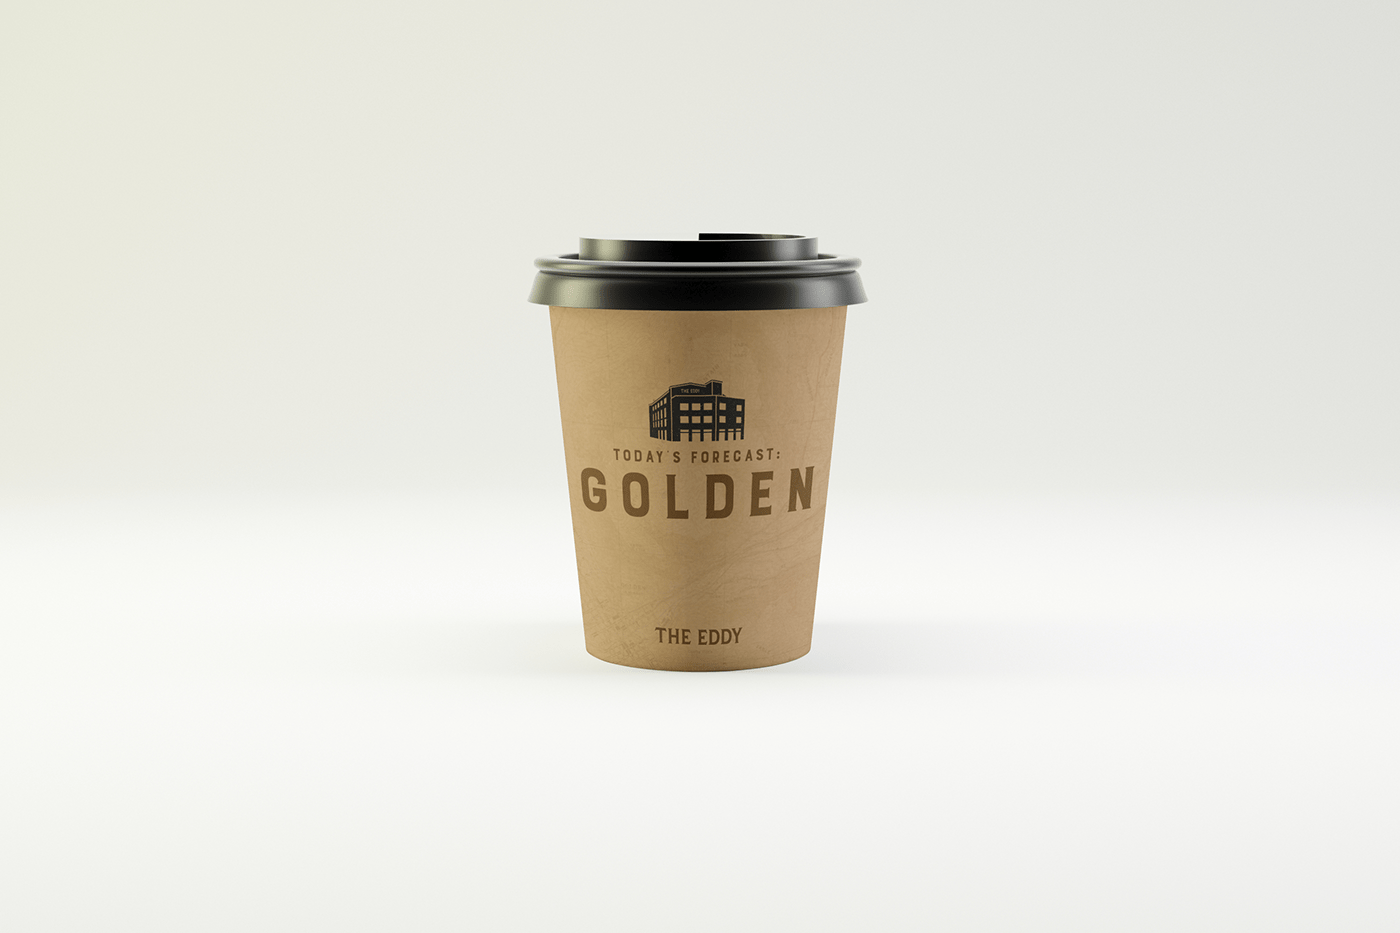 Image may contain: cup, coffee and mug